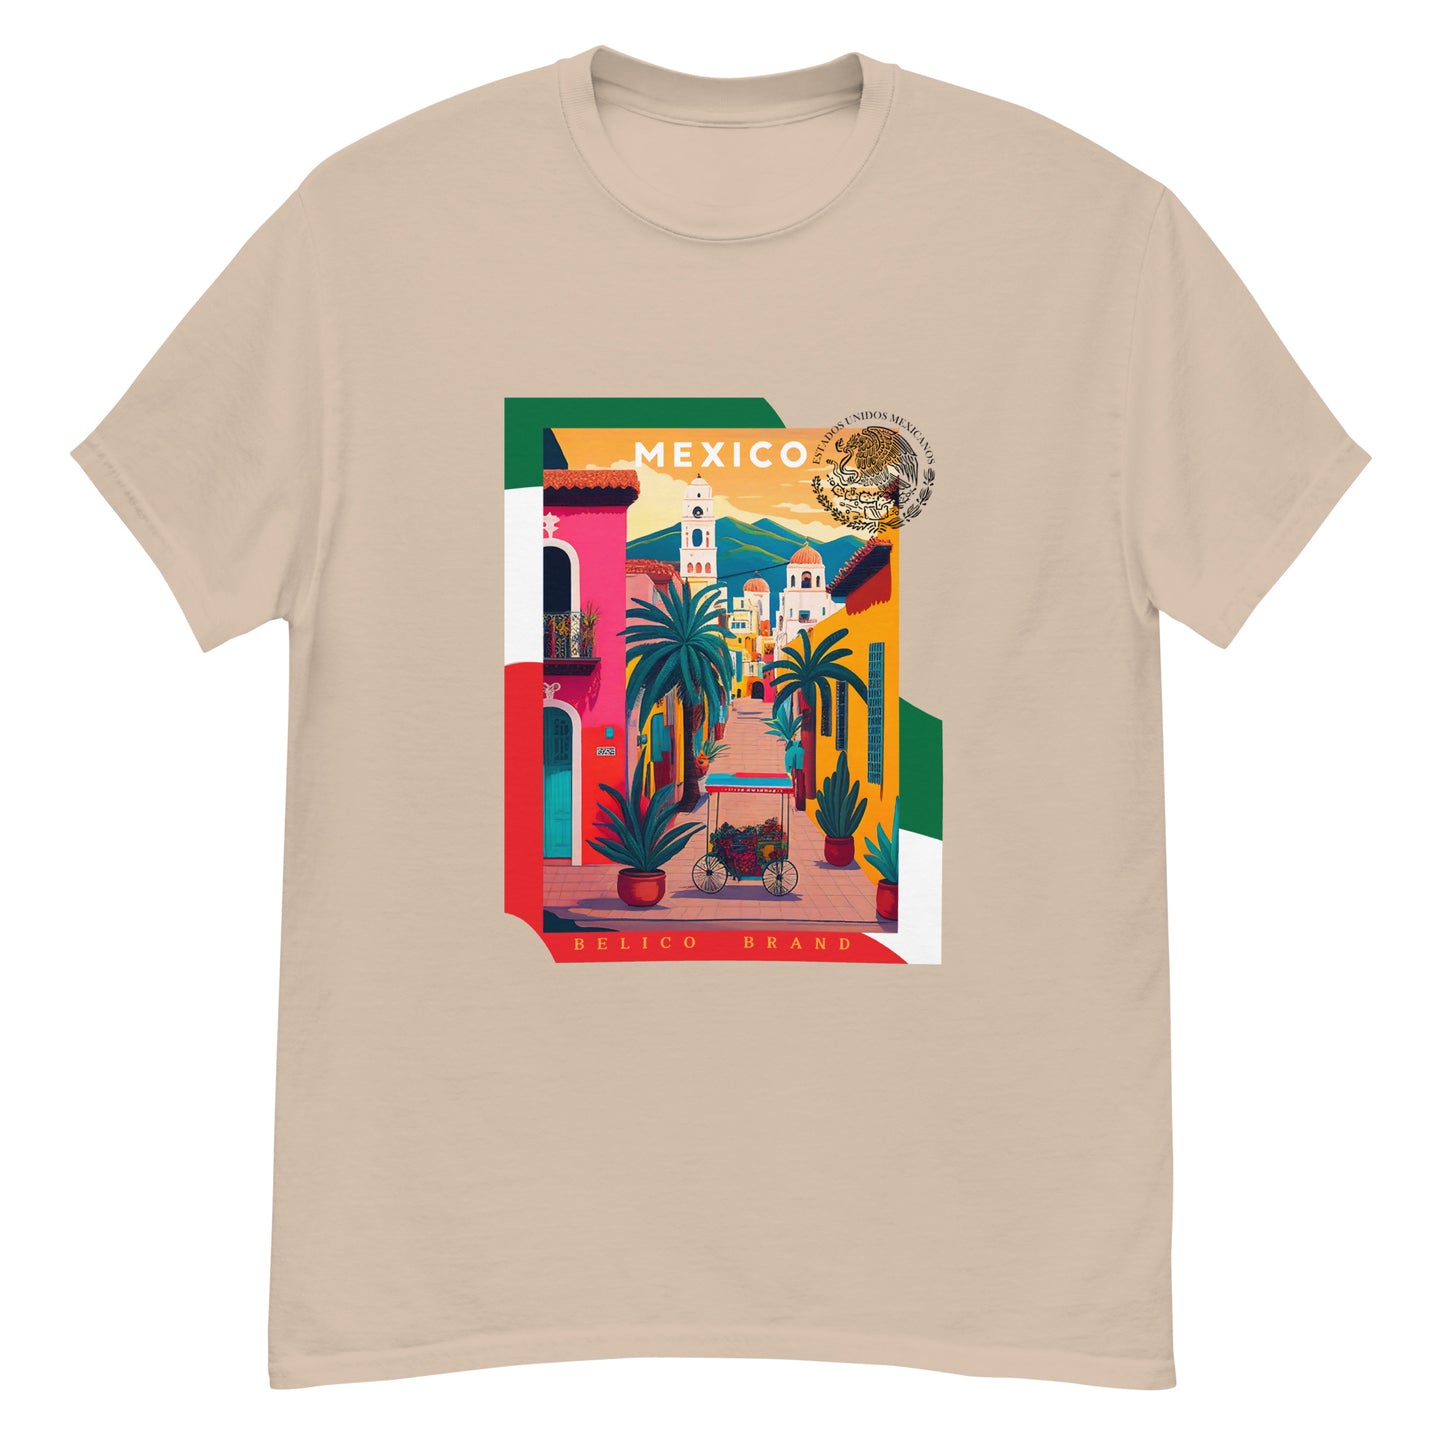 Mexico Illustration T-Shirt